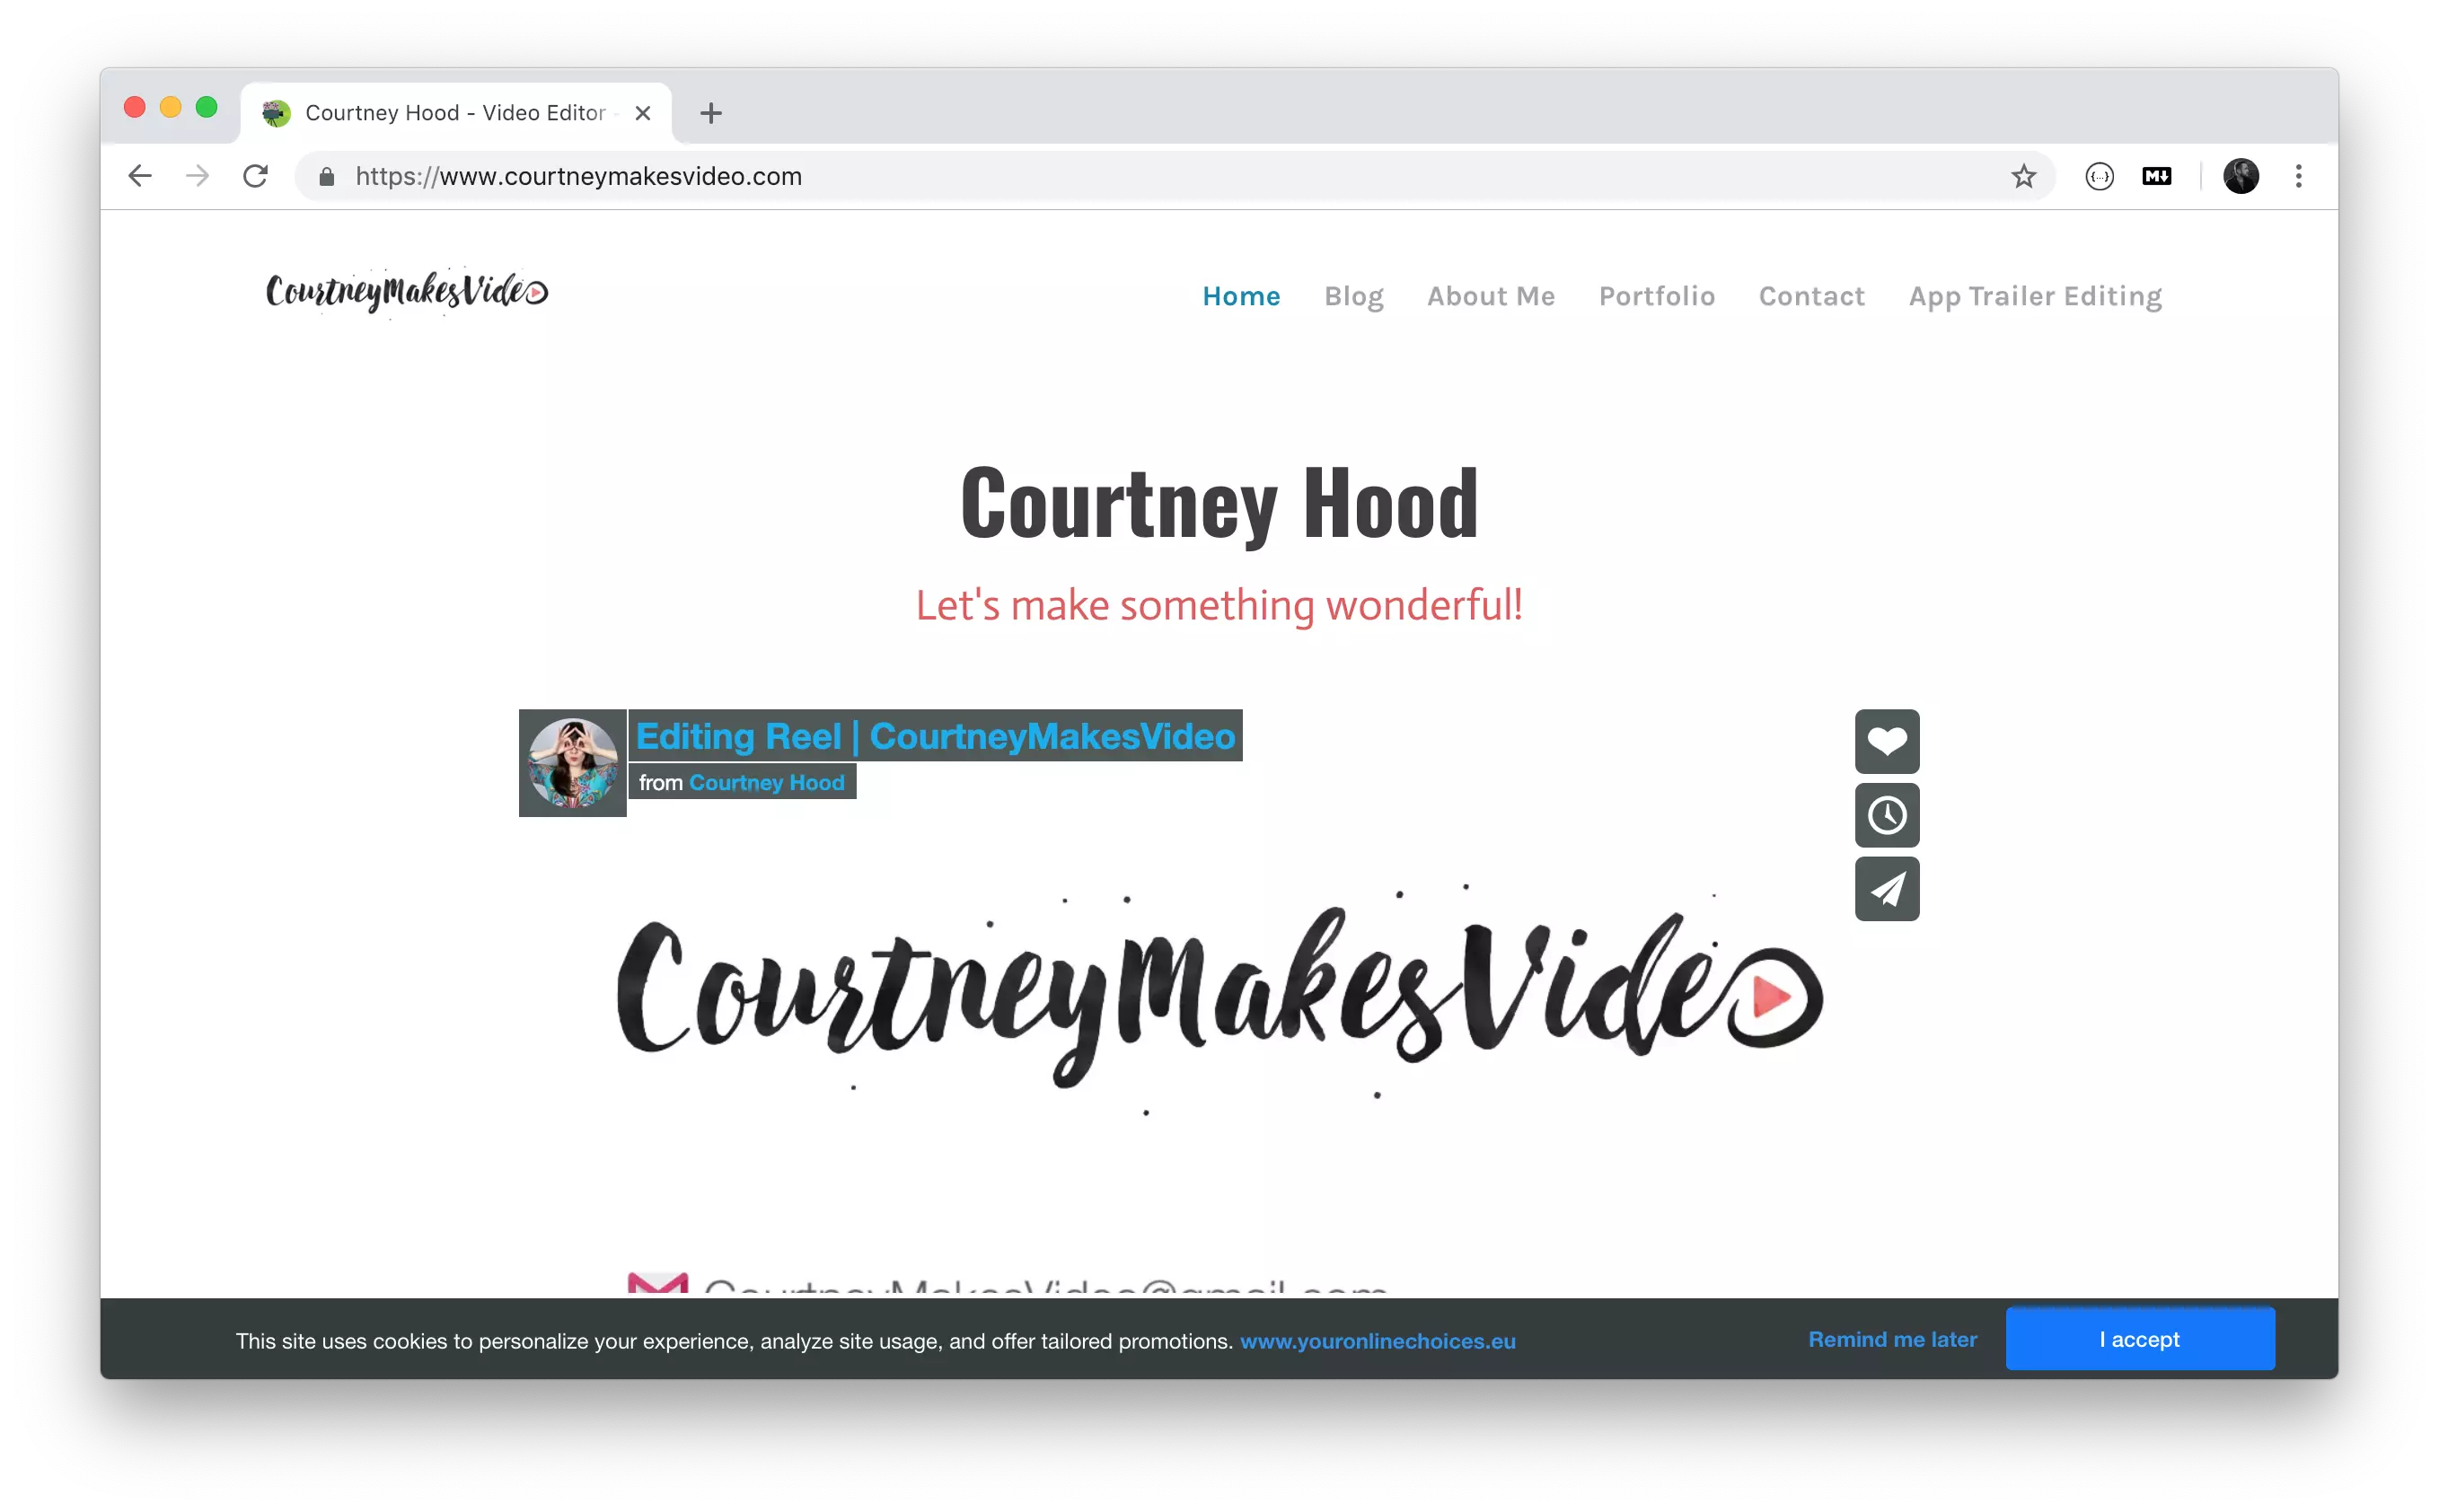 Courtney Hood - Video Editor